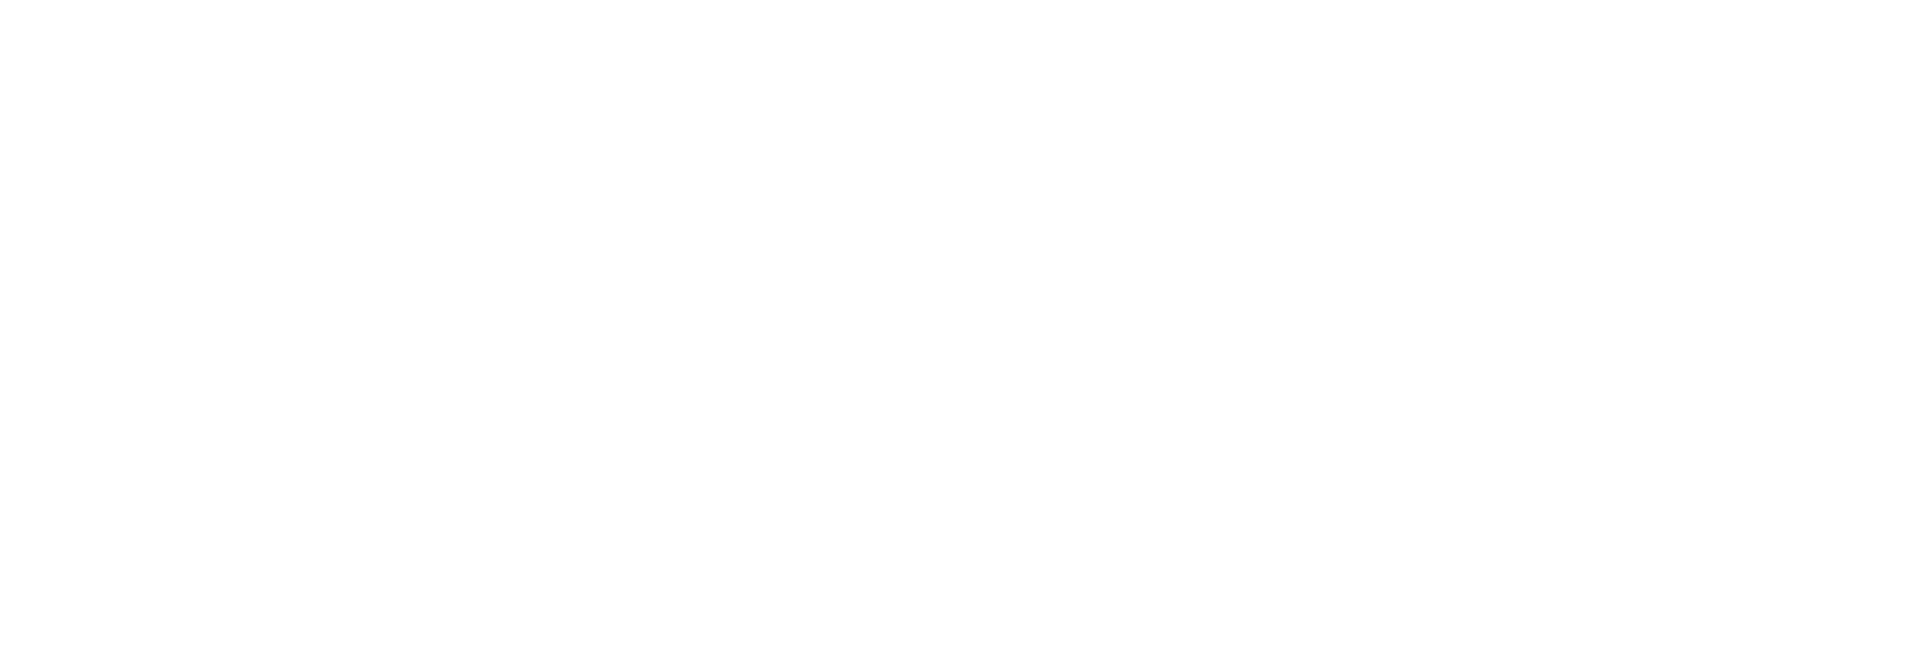 West University Wellness 